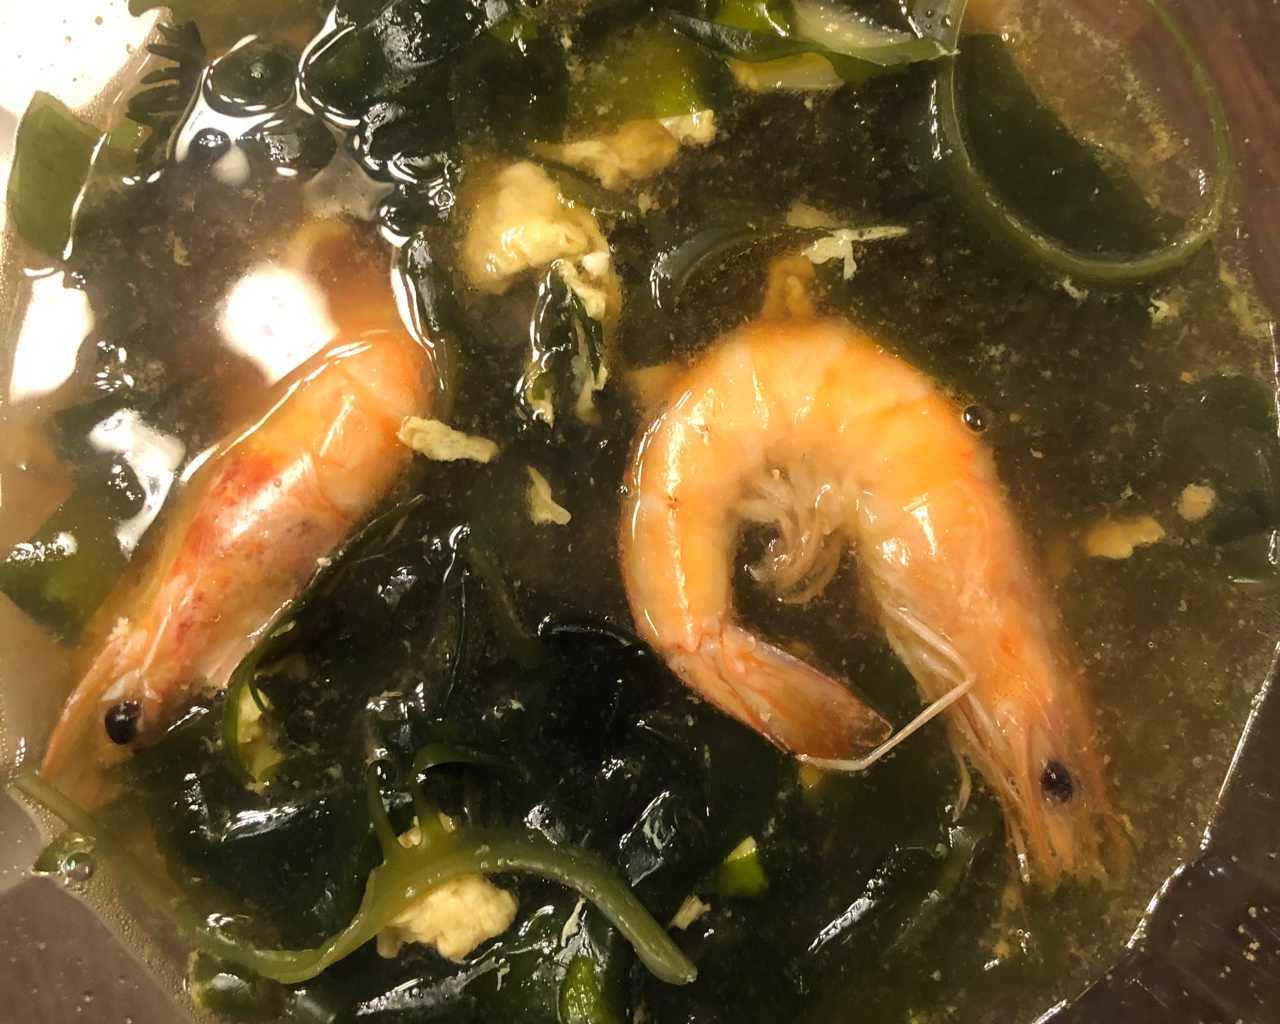 
Kelp egg soup (kelp bud egg spends soup) practice